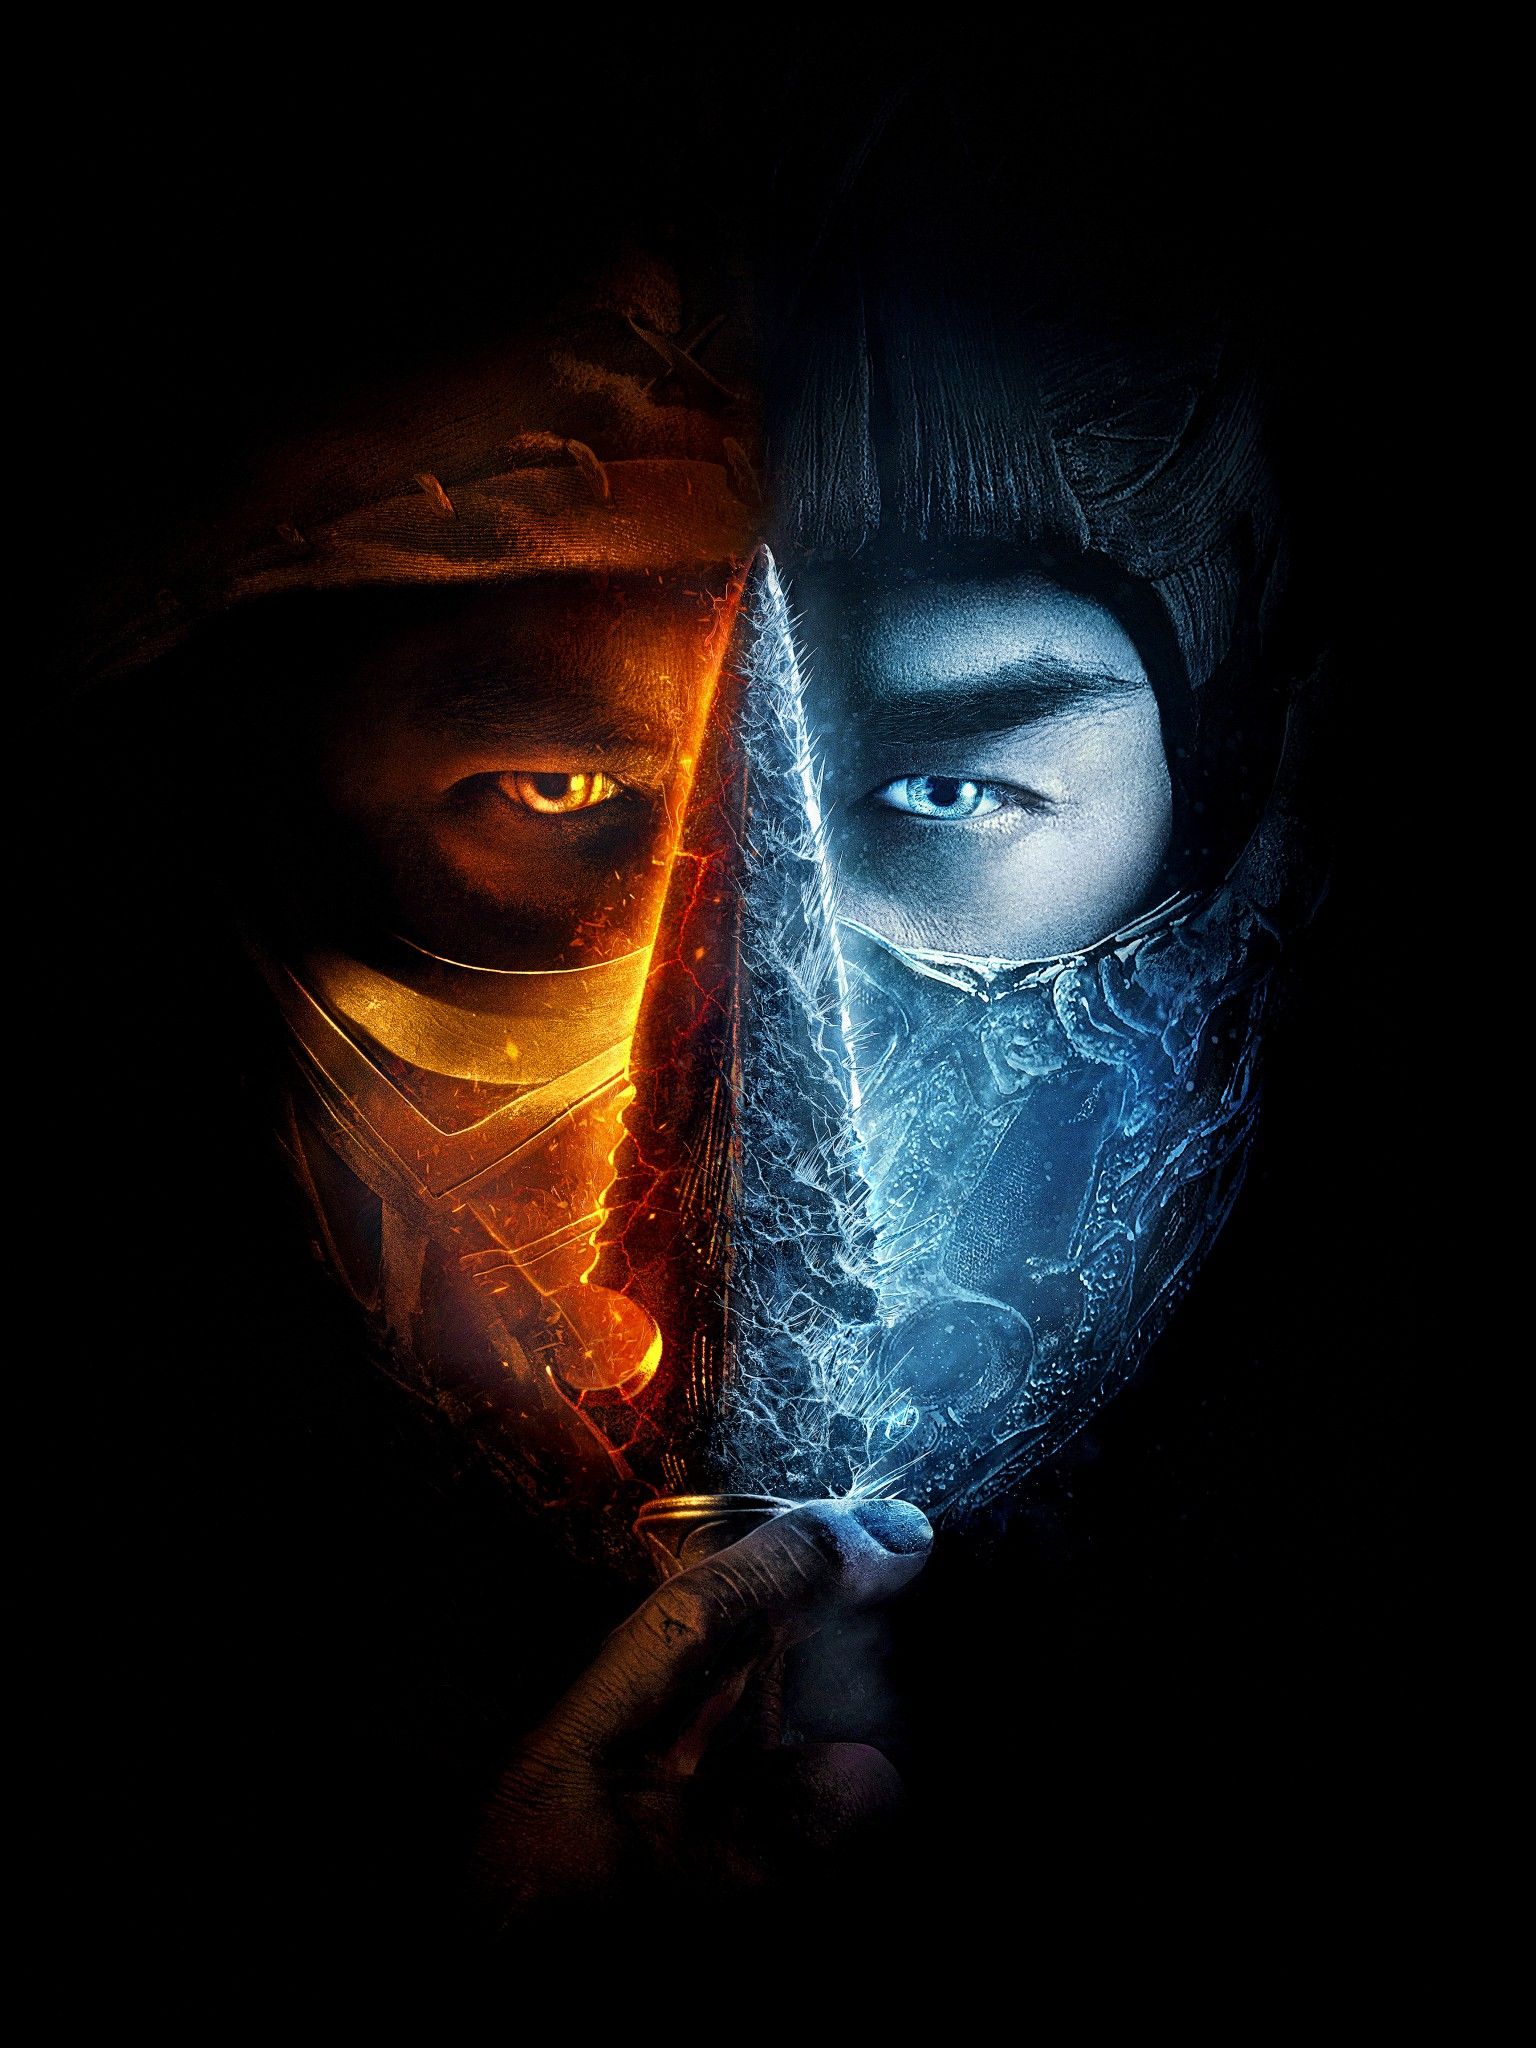 Mortal Kombat 4K Wallpaper, 2021 Movies, Scorpion, Sub Zero, Black Background, 5K, 8K, Black Dark